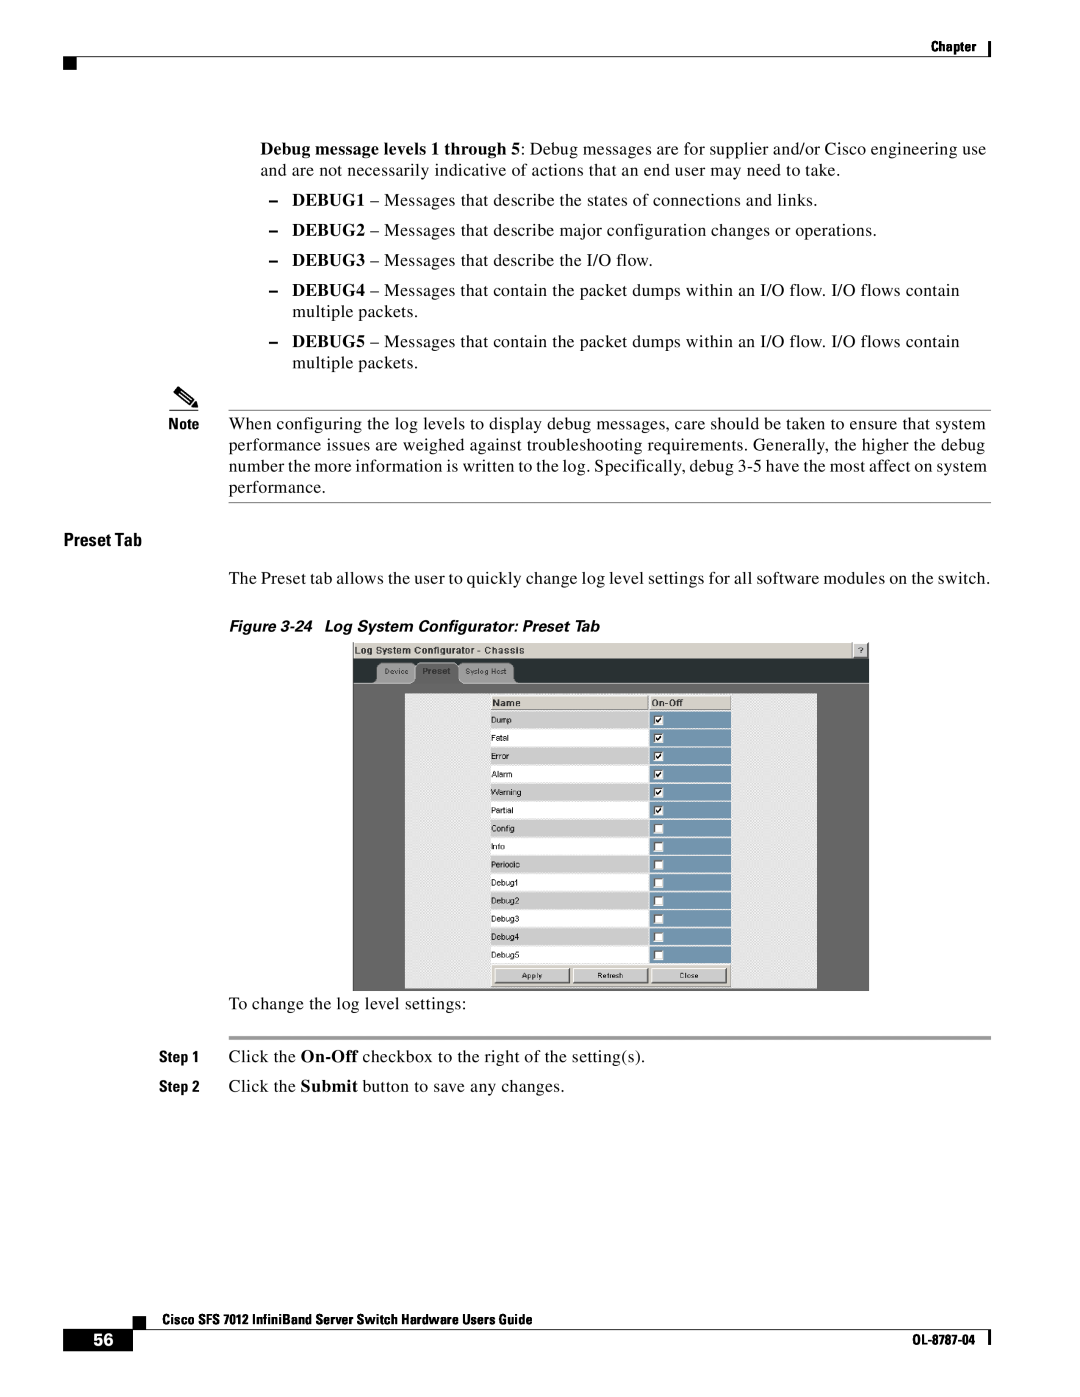 Cisco Systems SFS 7012 manual 24 Log System Configurator Preset Tab 